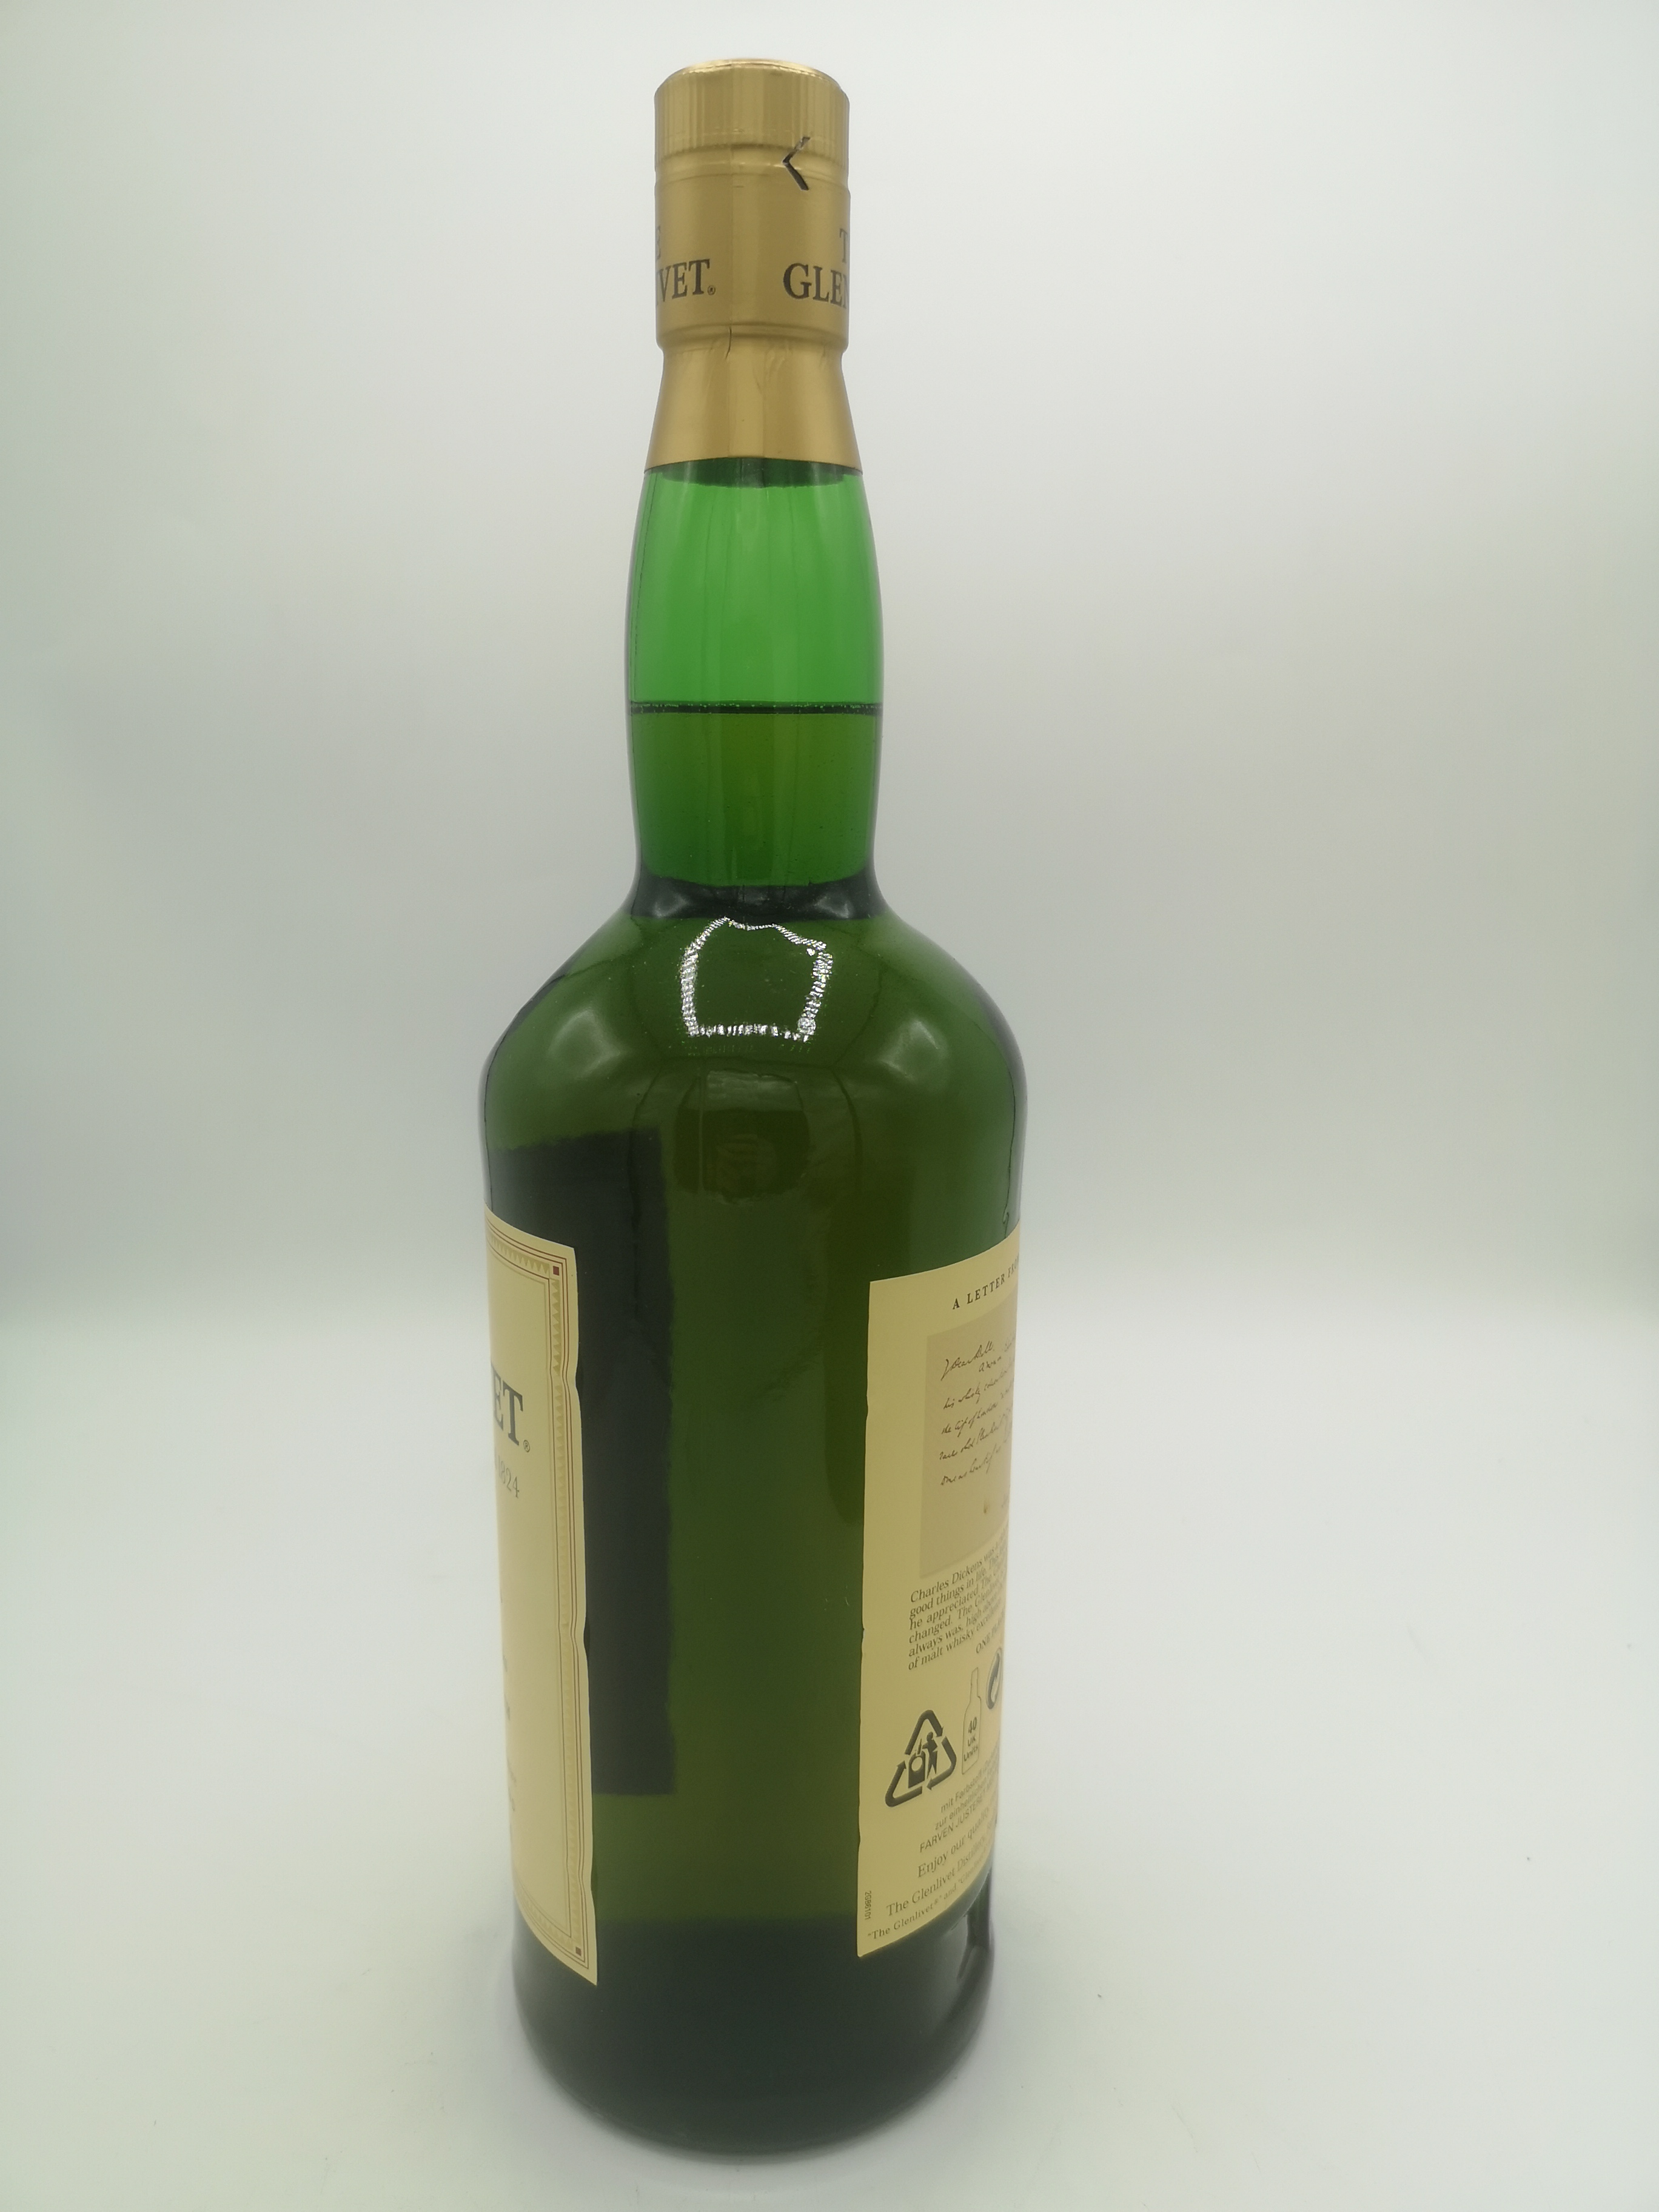 The Glenlivet, 1l pure single malt Scotch whisky - Image 2 of 7